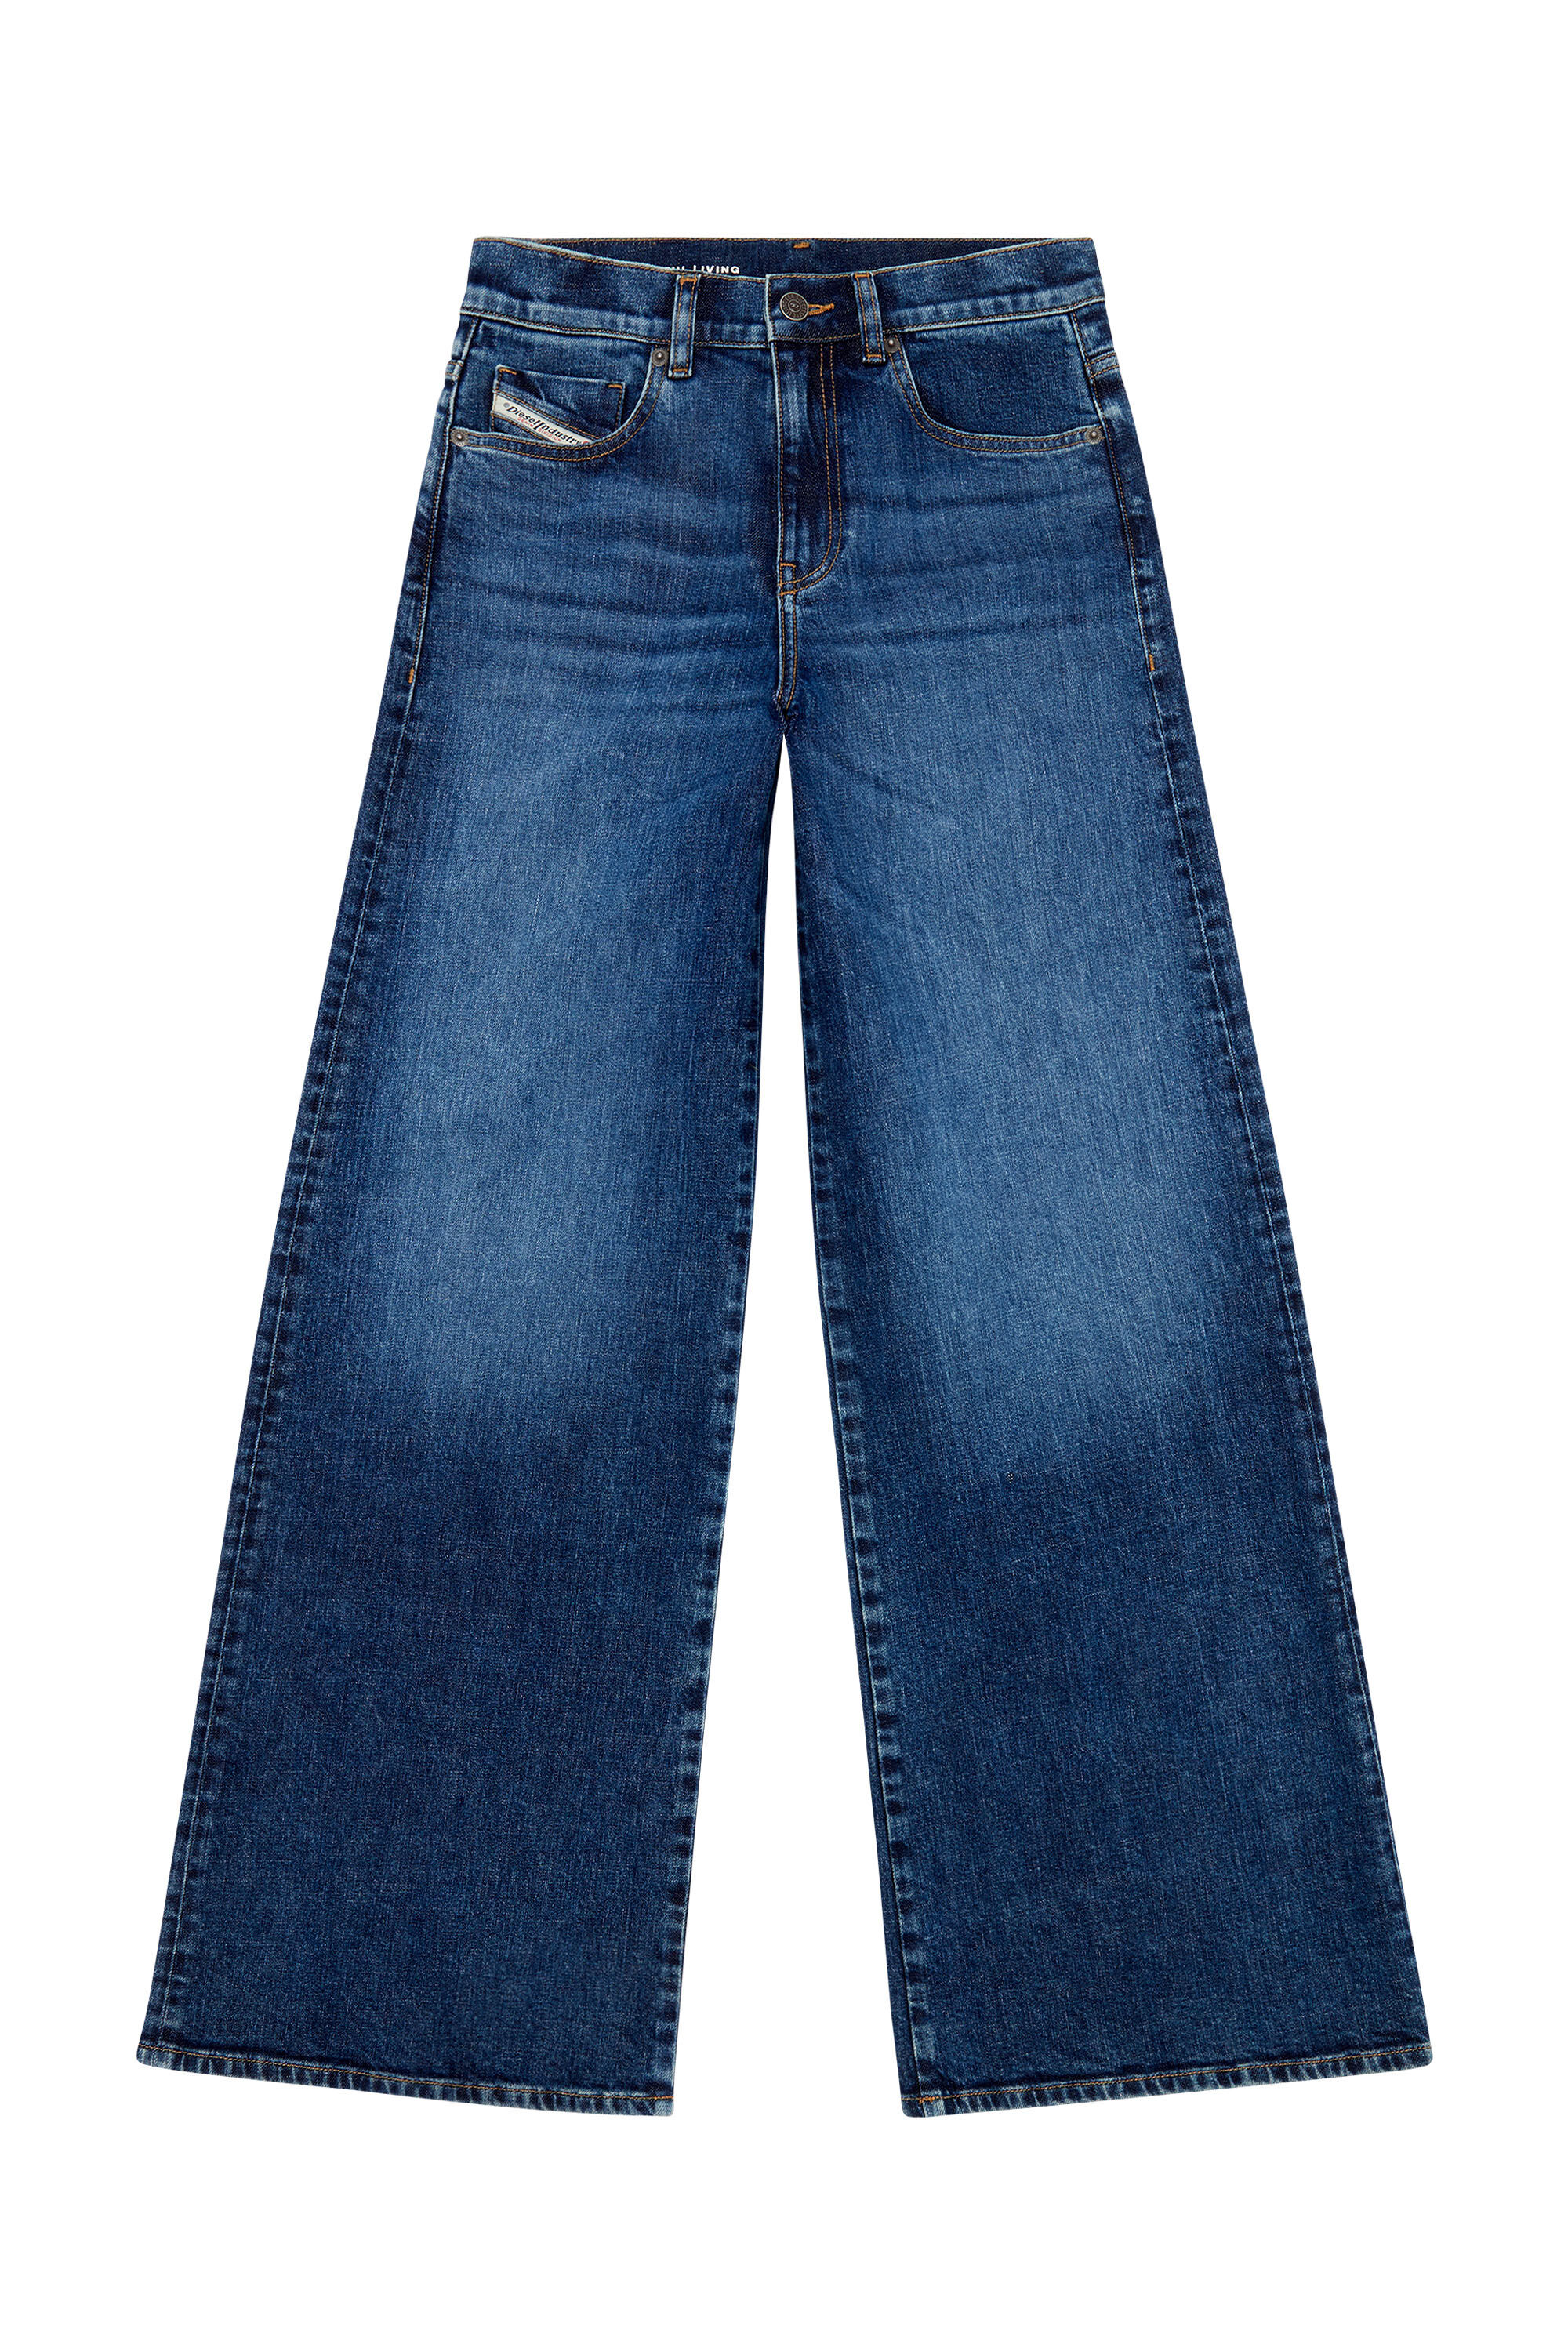 Women's Flare and Bootcut Jeans | Dark blue | Diesel 1978 D-Akemi